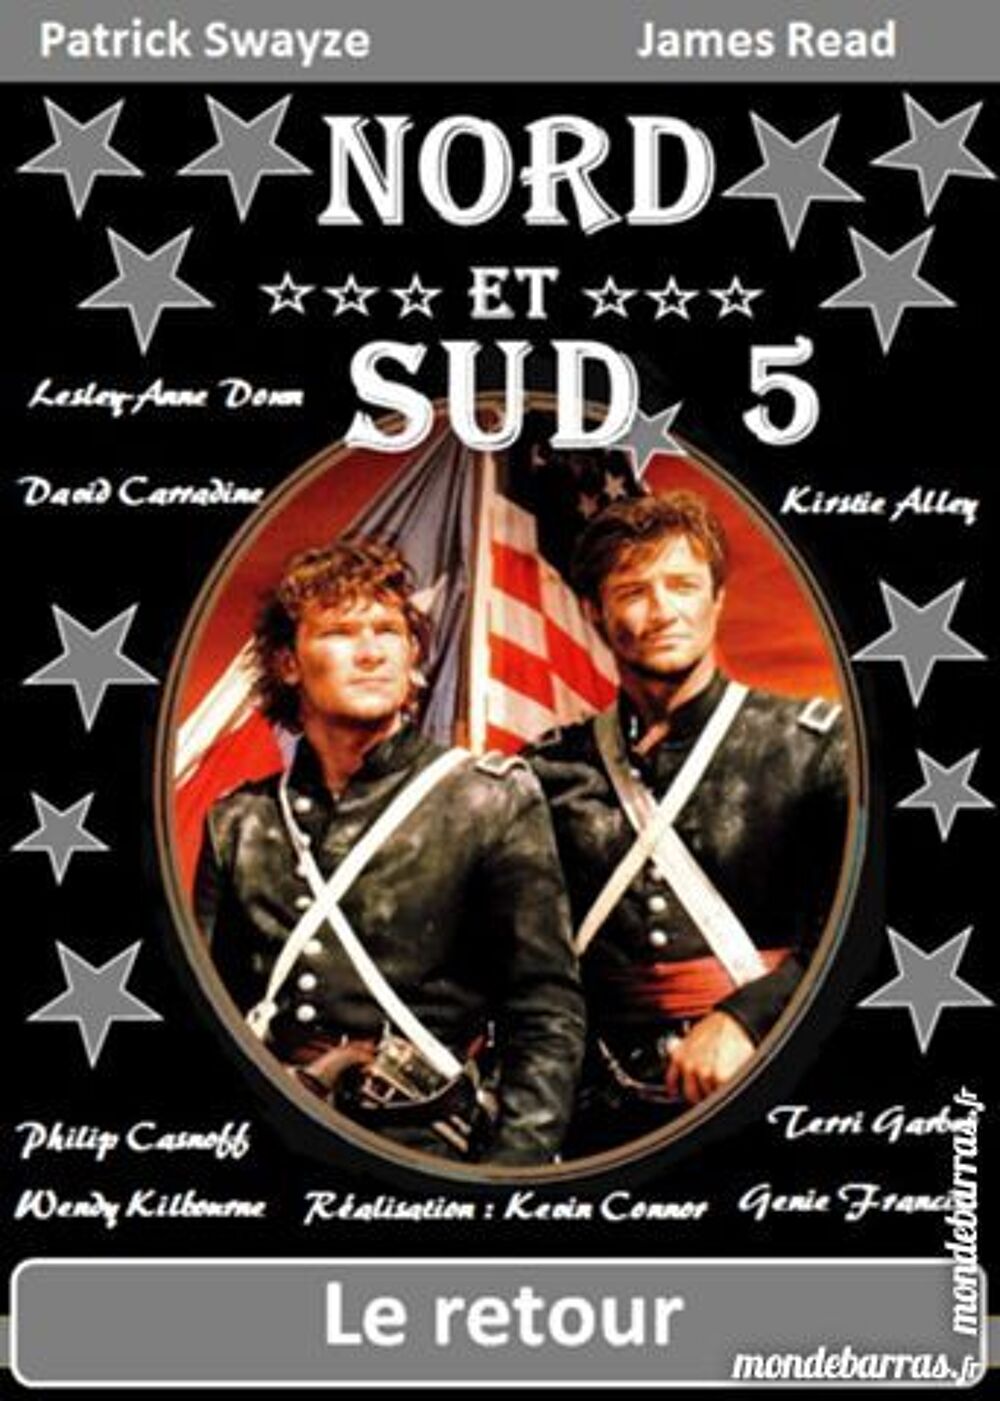 K7 vhd: Nord et Sud 5 (423) DVD et blu-ray